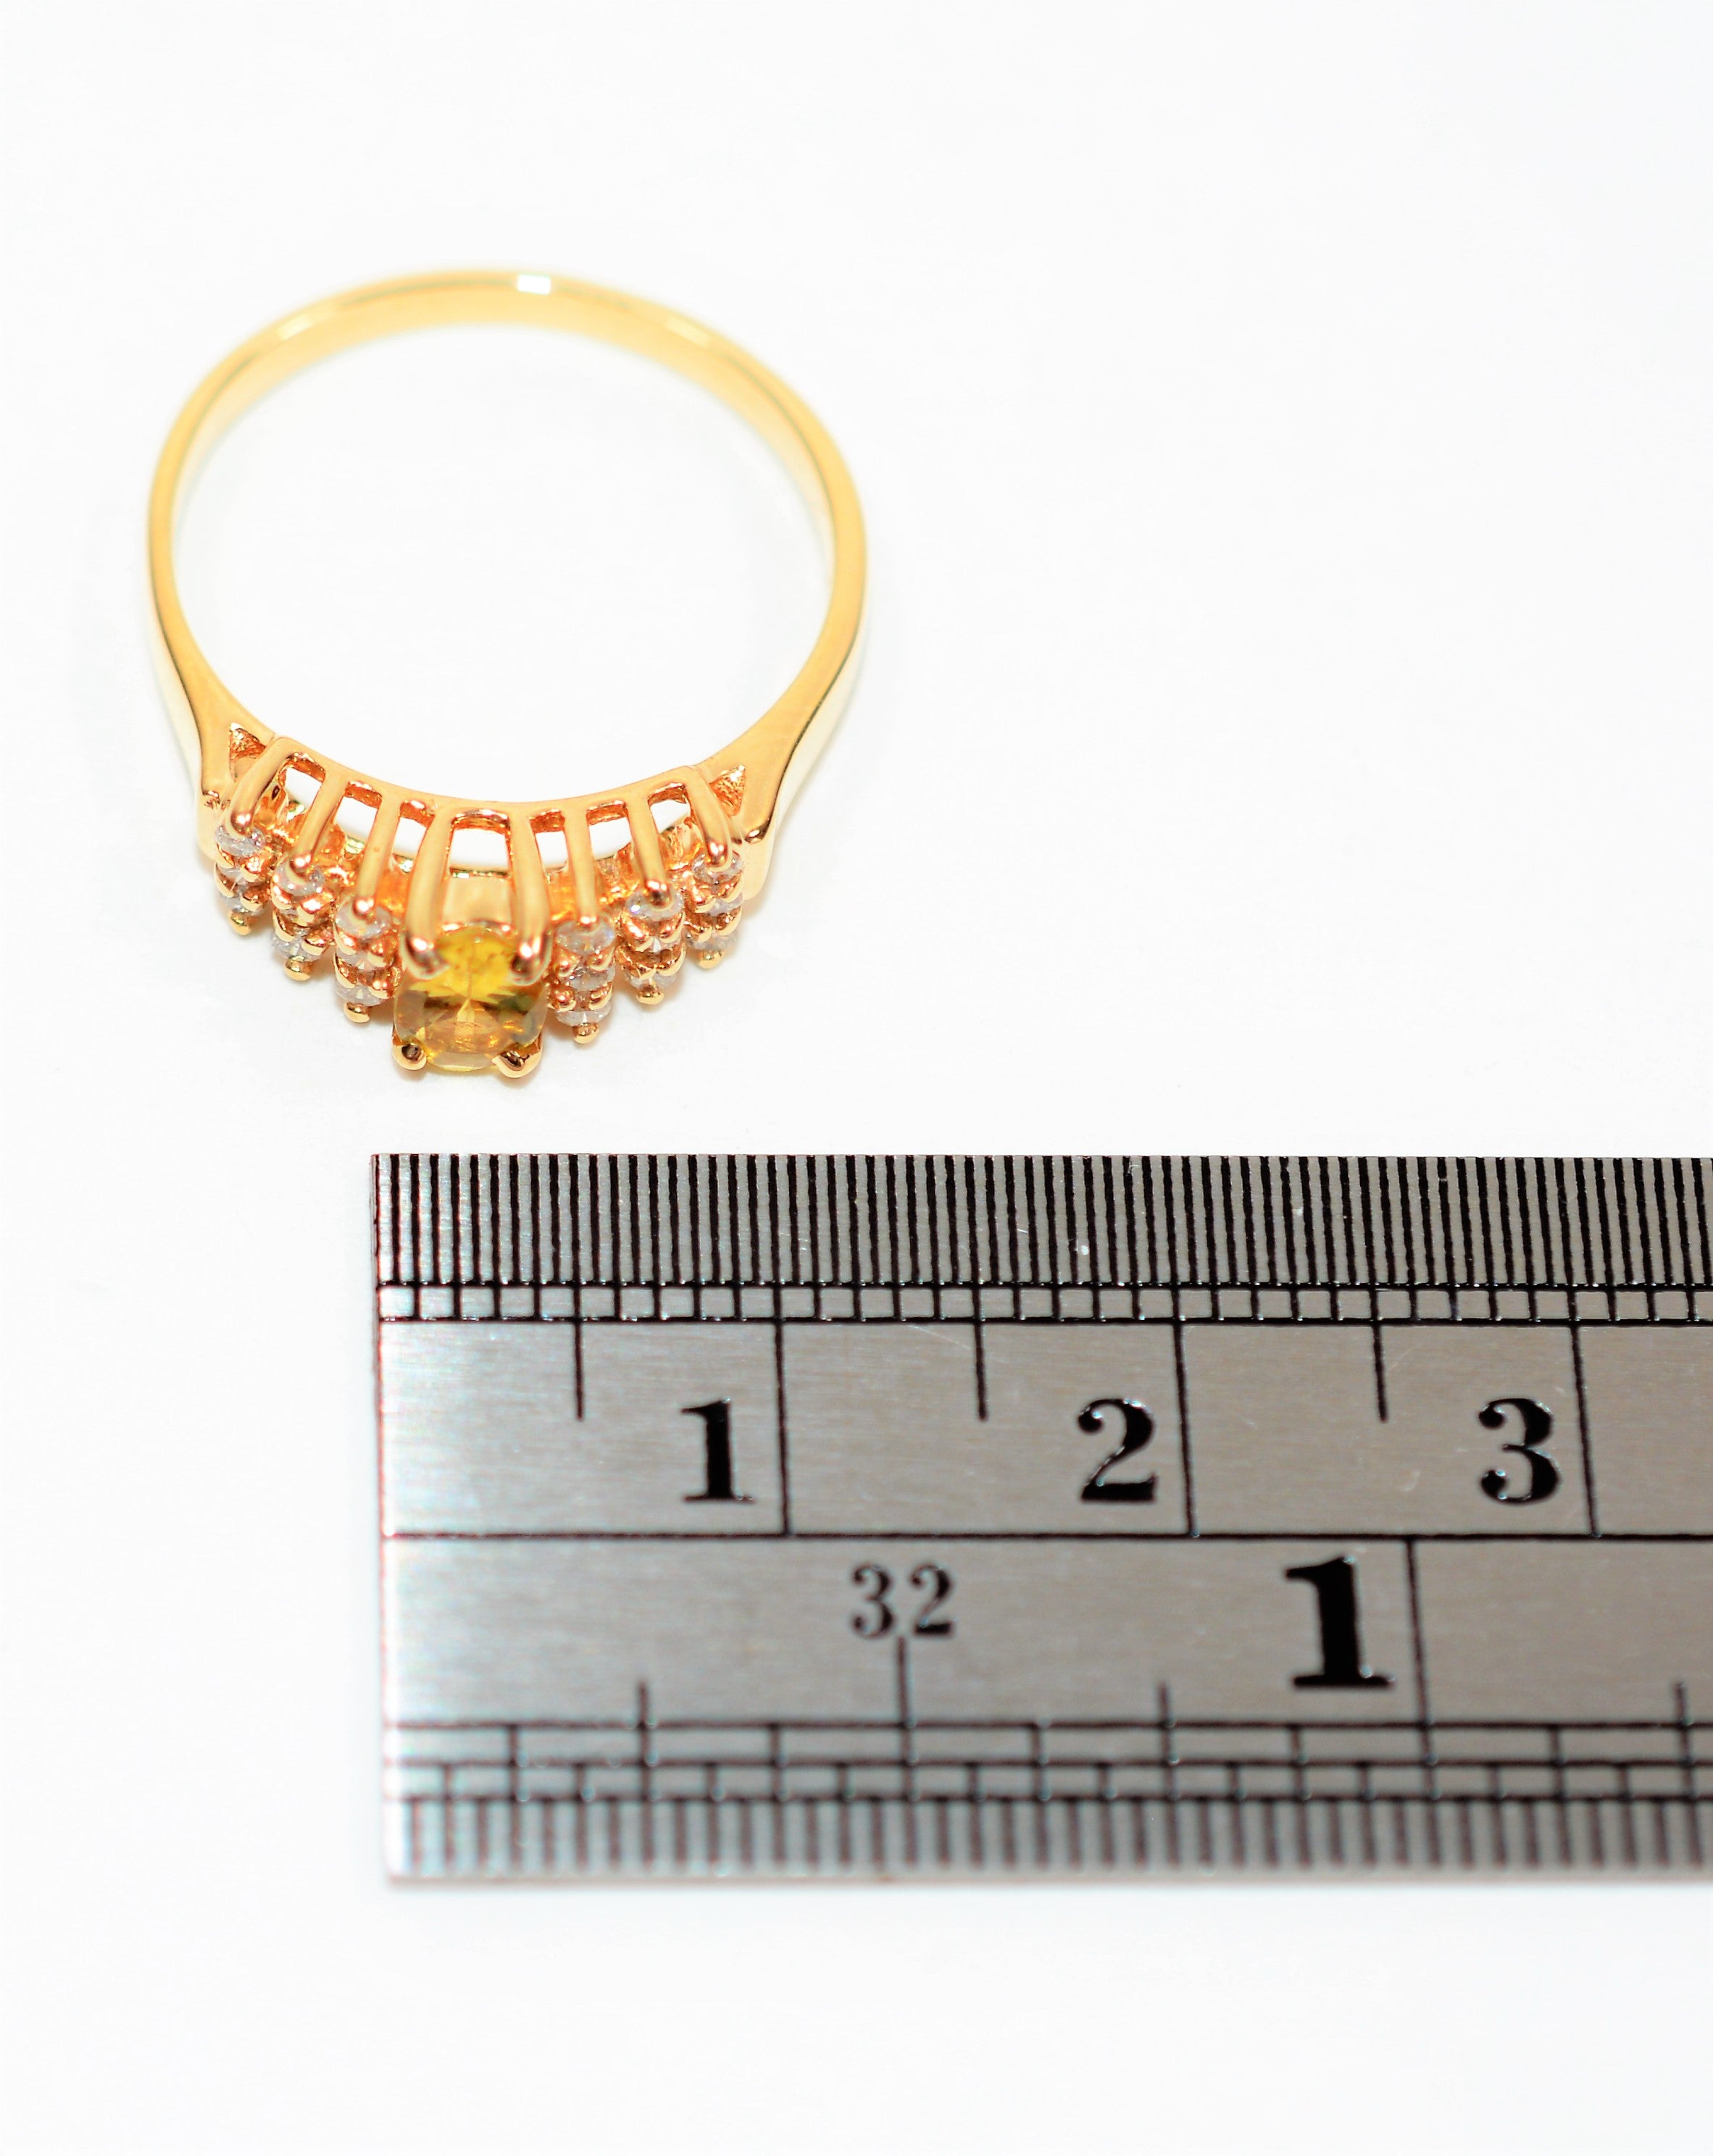 Natural Unheated Tanzanite & Diamond Ring 14K Solid Gold .72tcw Cluster Ring Gemstone Ring Tanzanite Ring Vintage Ring Women's Ring Jewelry